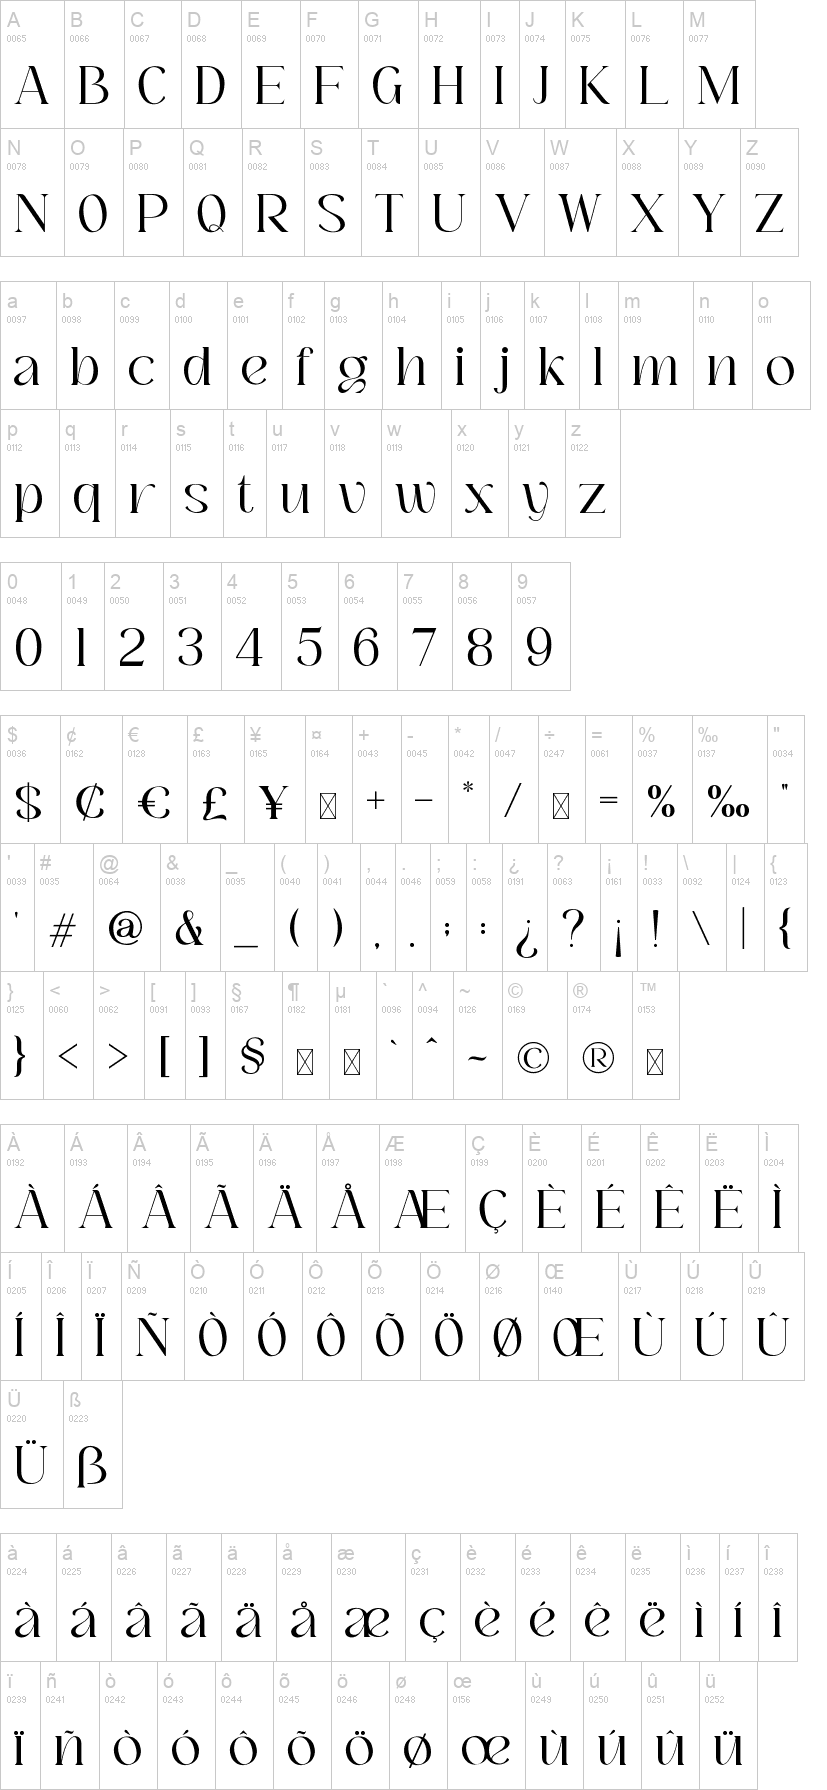 Bochan Serif